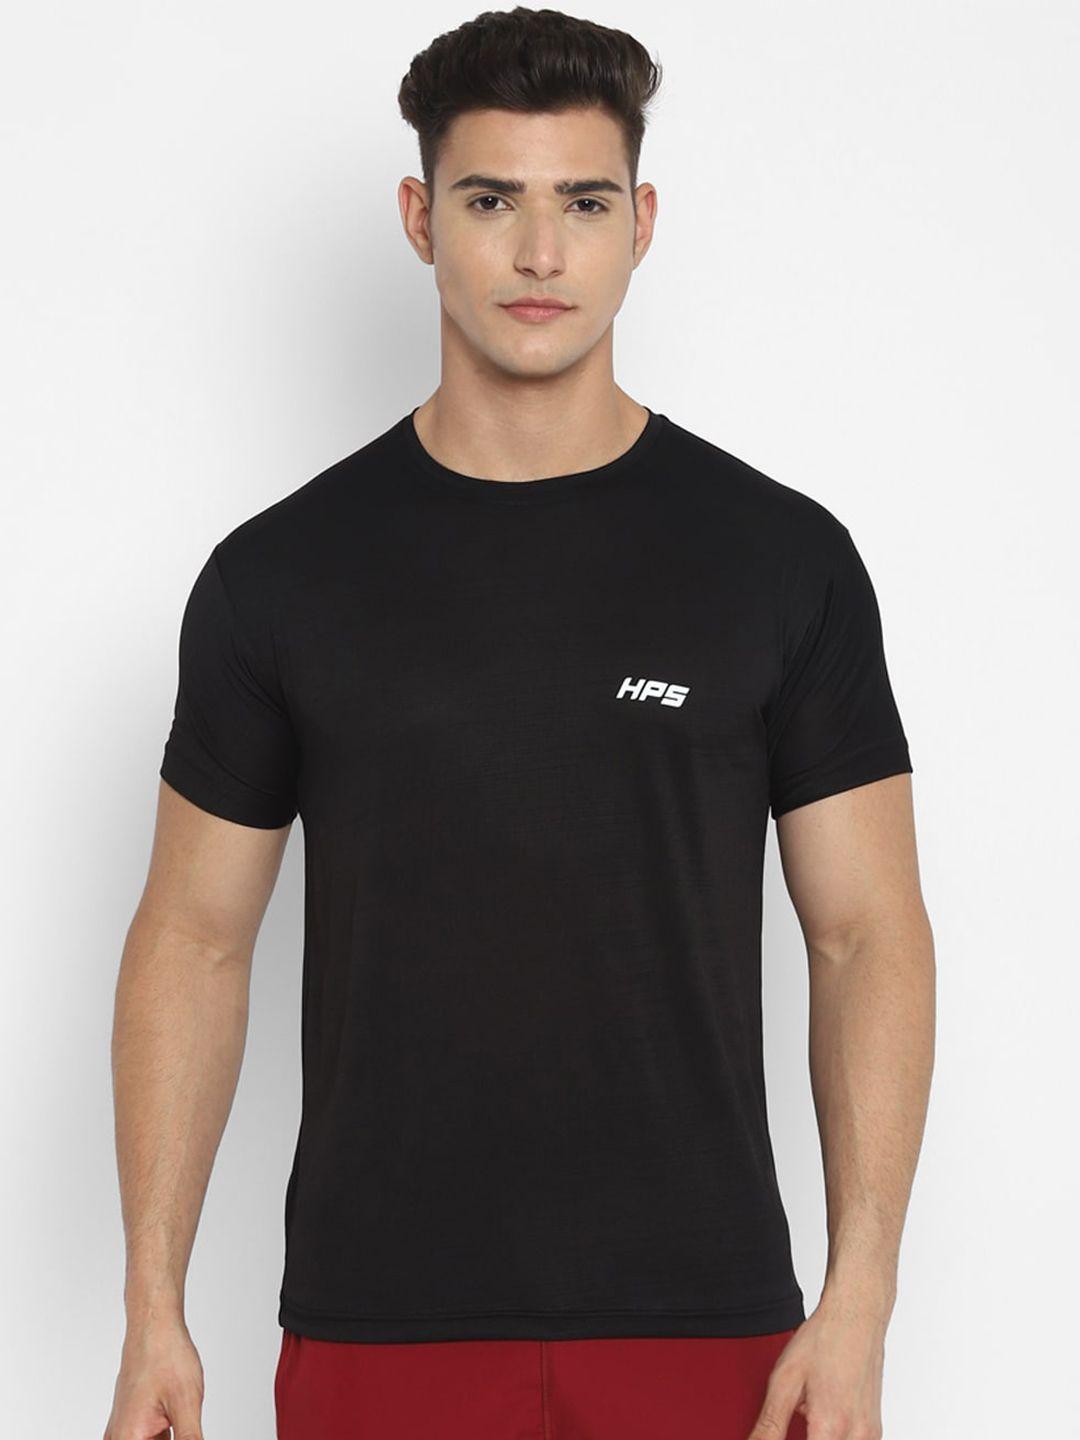 hps-sports-men-black-running-t-shirt